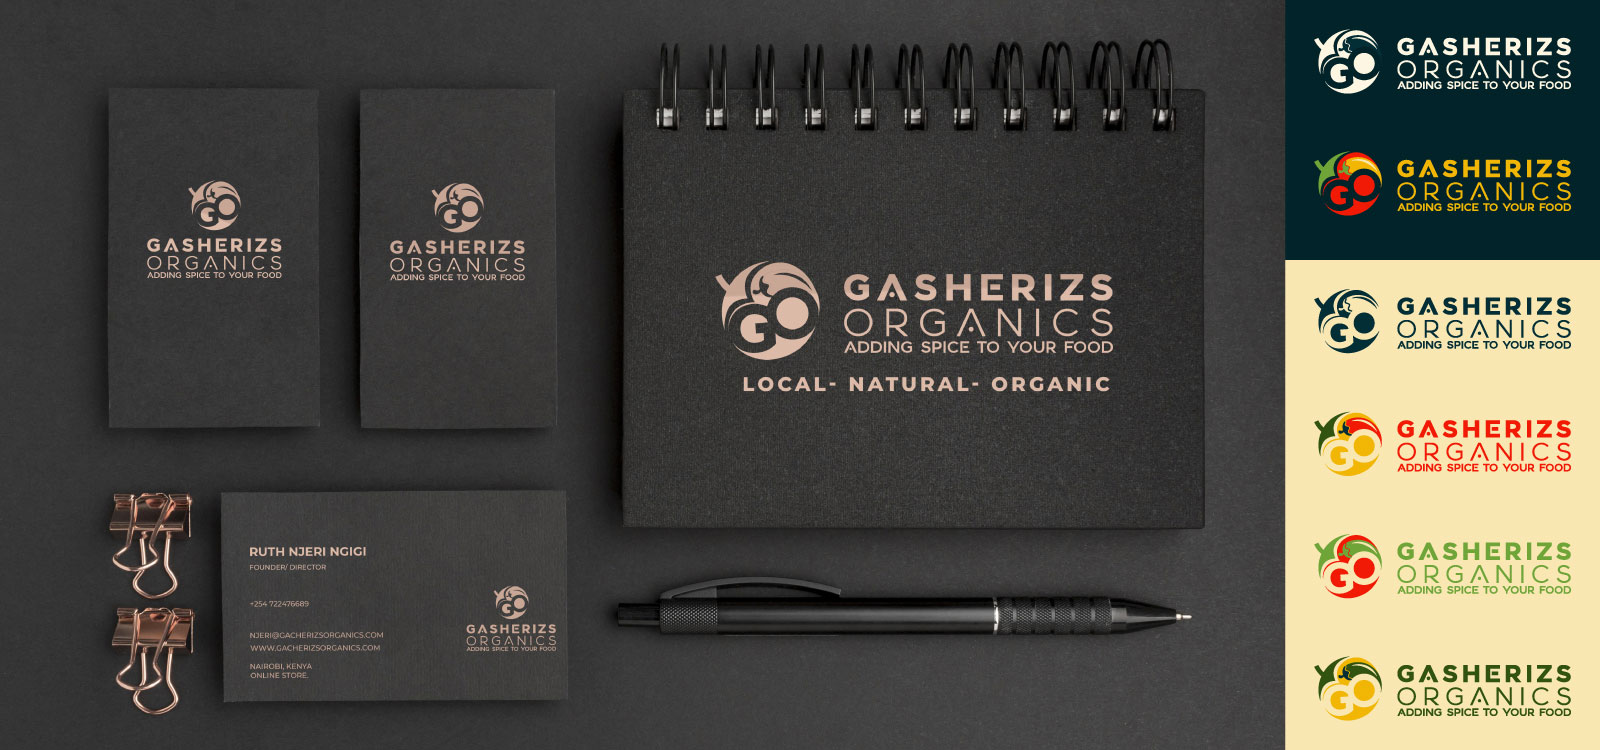 Singwa Enterprises, INC. created the brand identity for GaSherizs Organics.